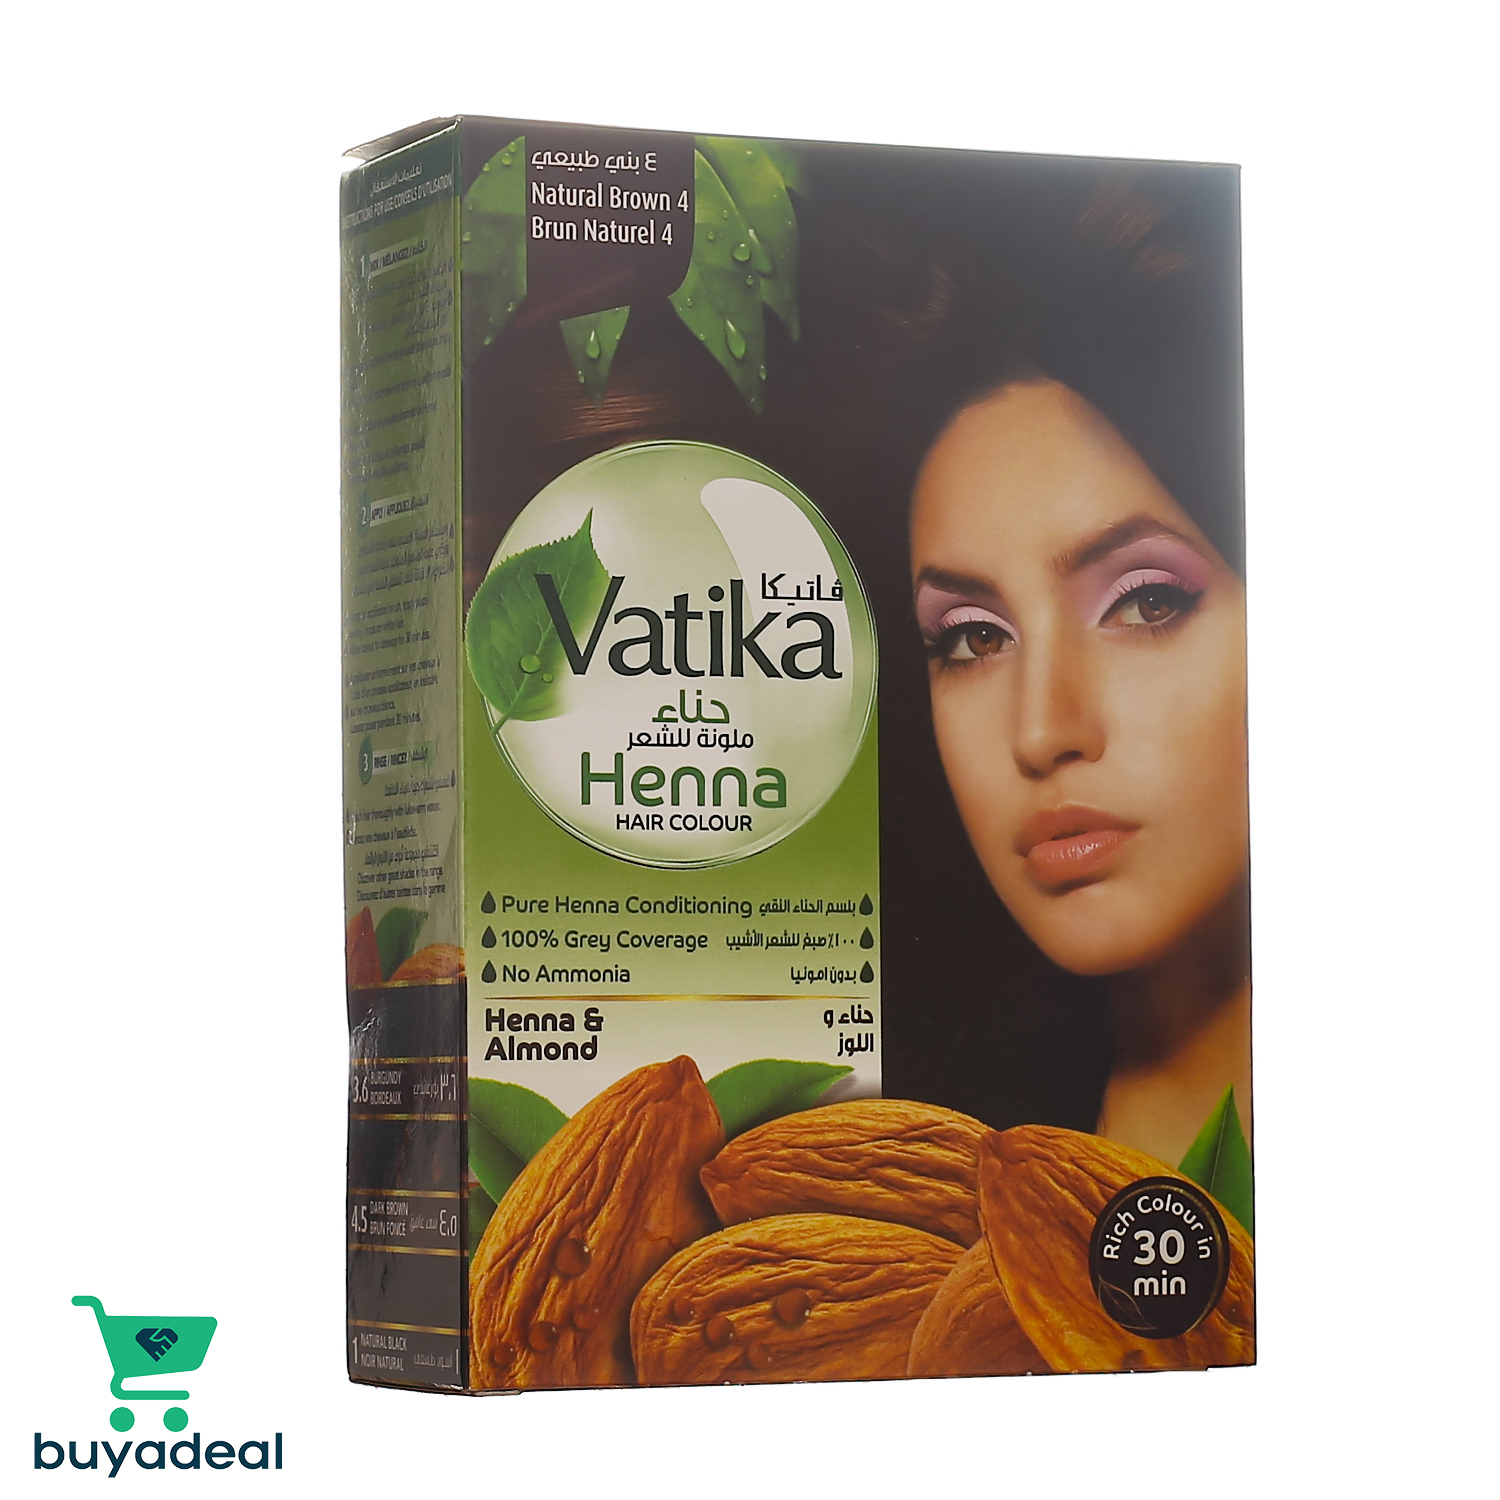 Buyadeal Product Dabur Vatika Henna Hair Color (Natural Brown) No 4- 60g